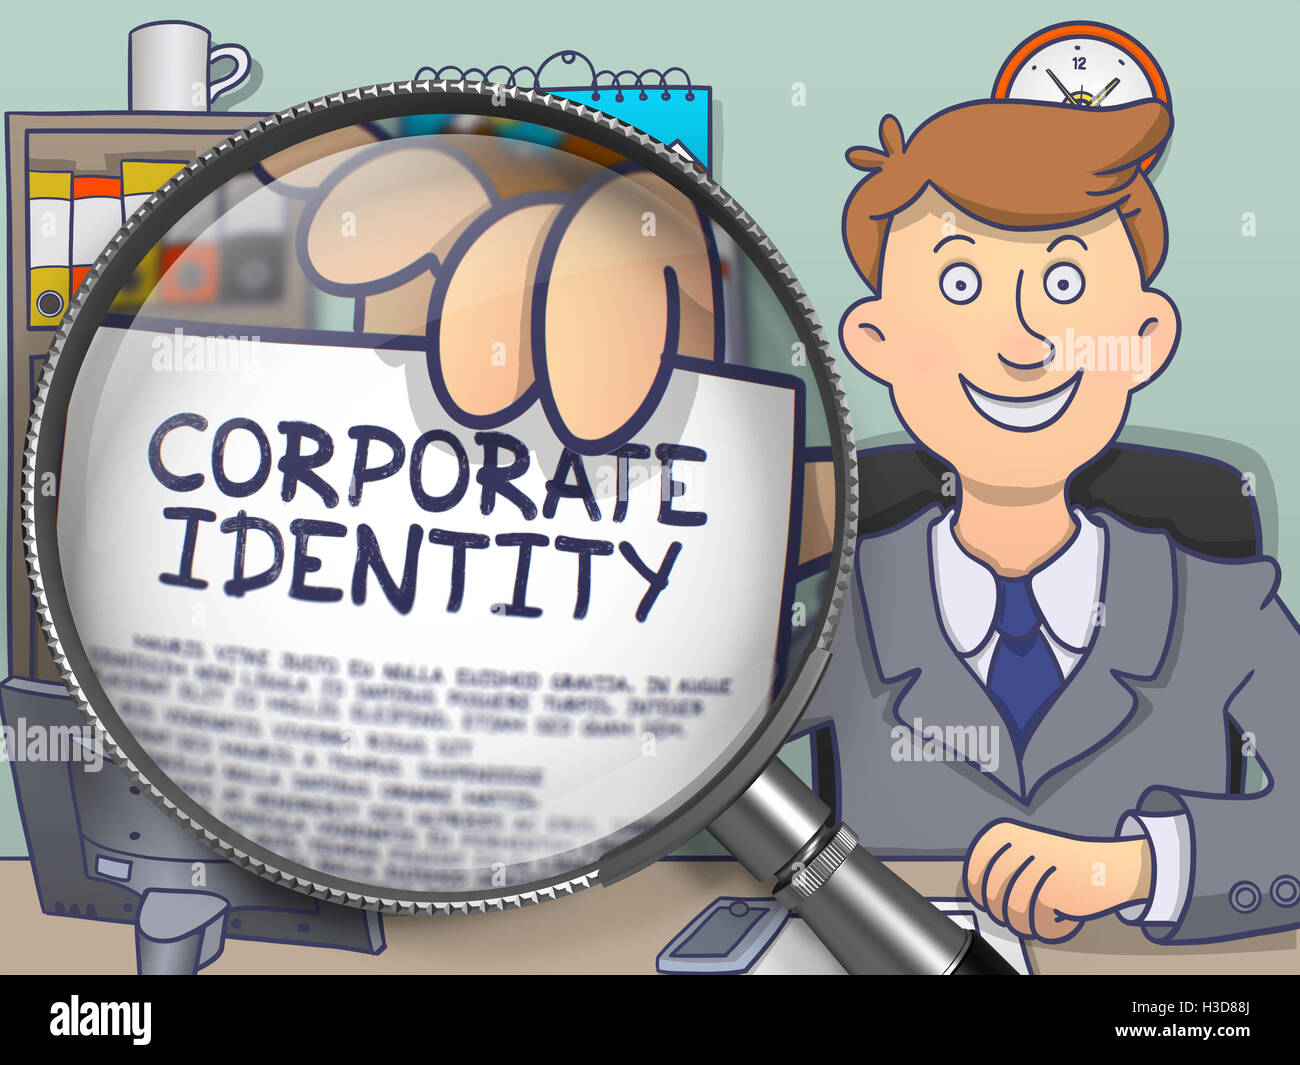 Corporate Identity durch Linse. Doodle-Design. Stockfoto